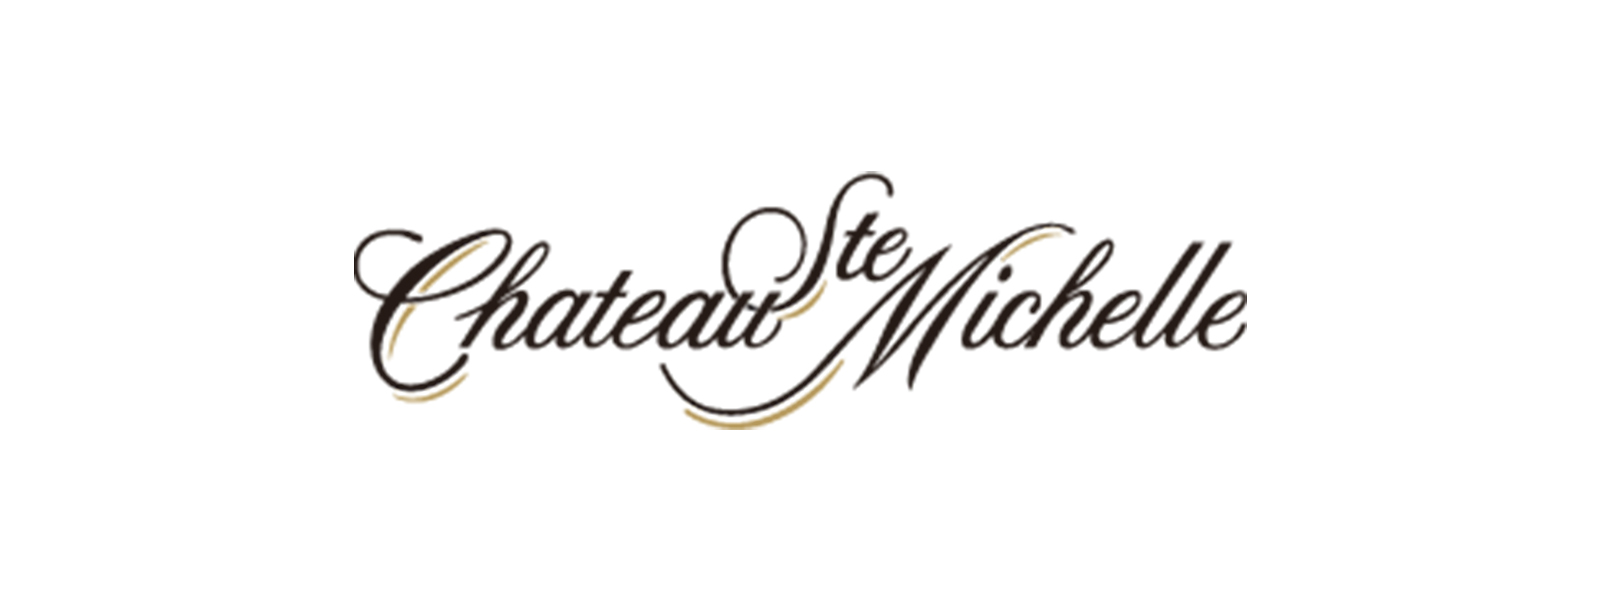 logos-Chateau Ste. Michelle